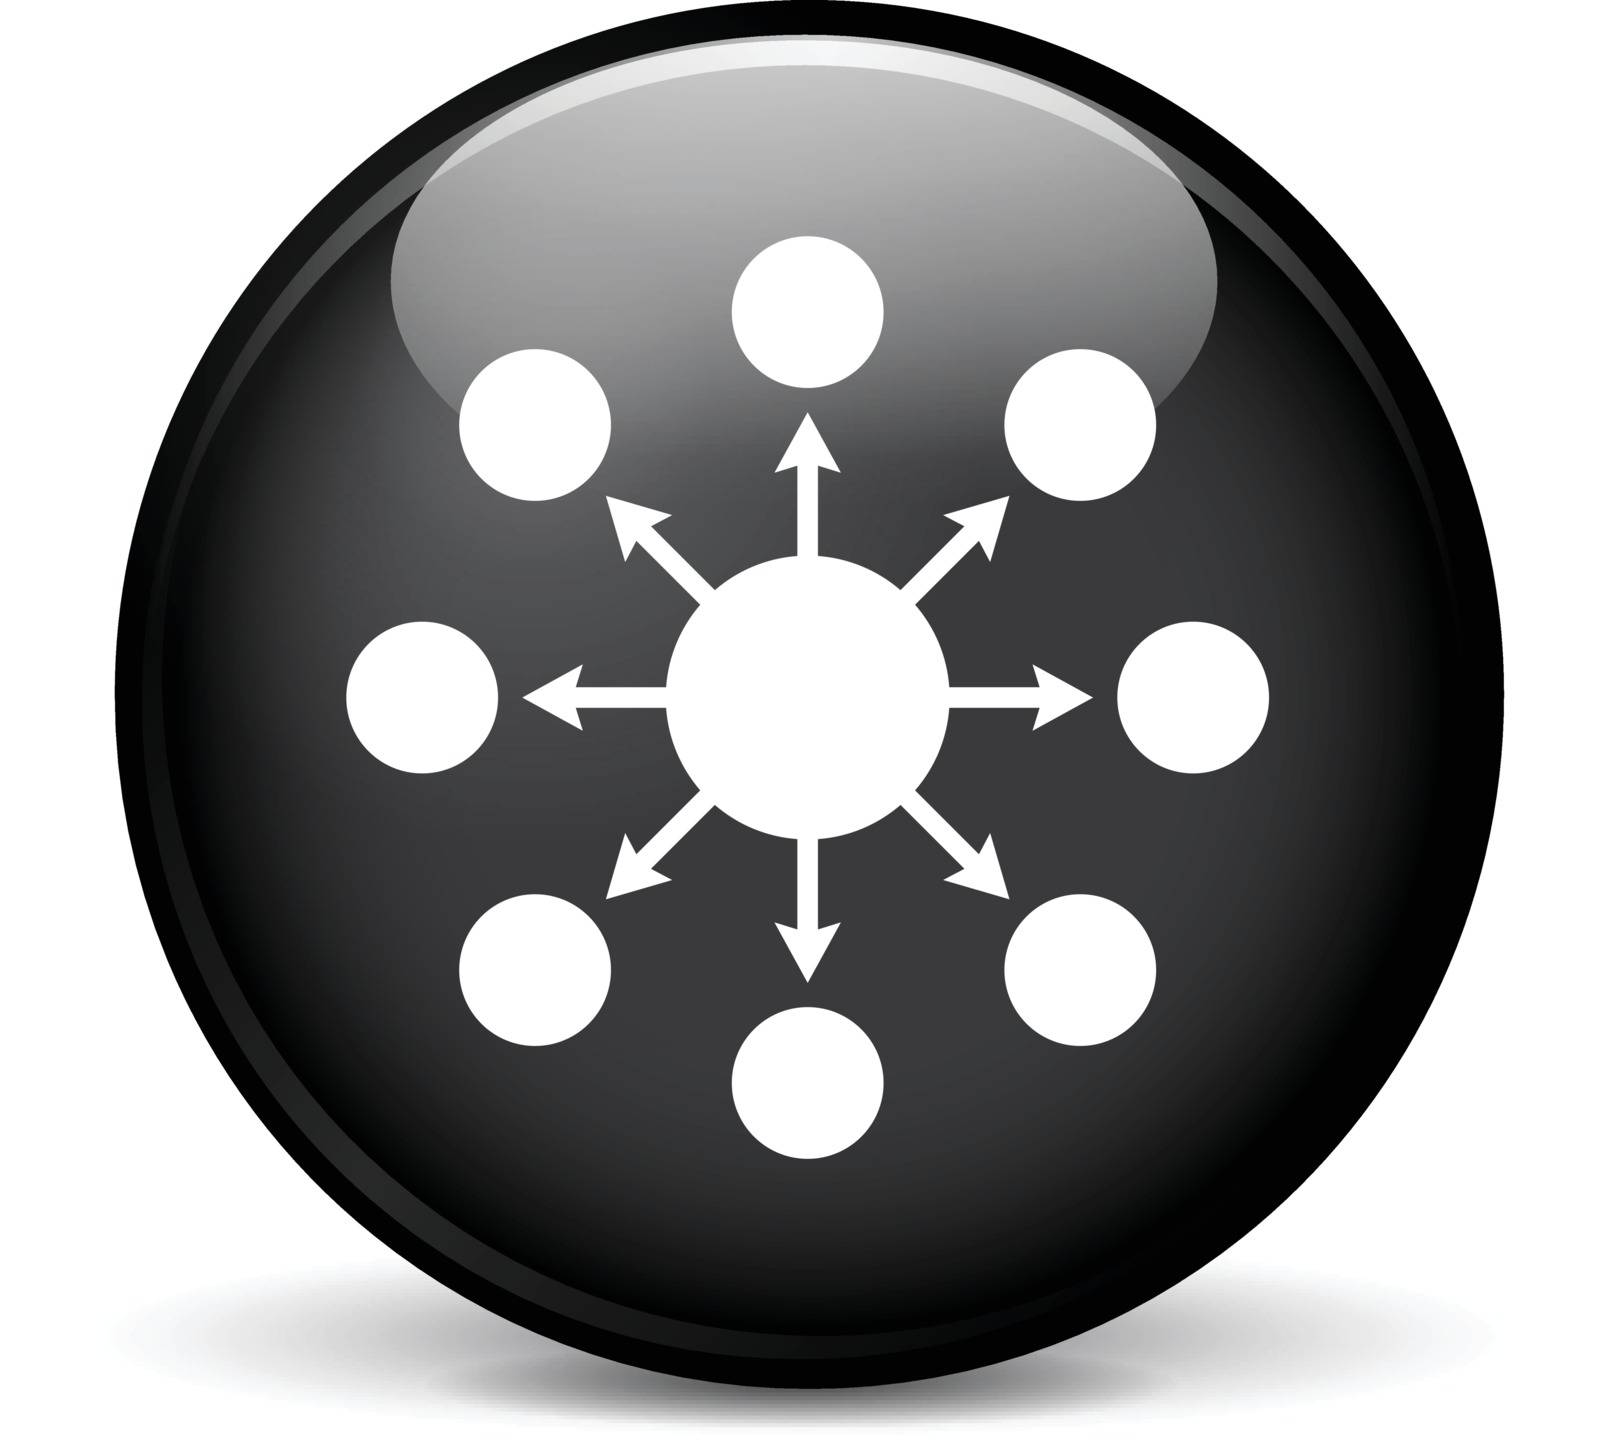 Illustration of seo modern design black sphere icon